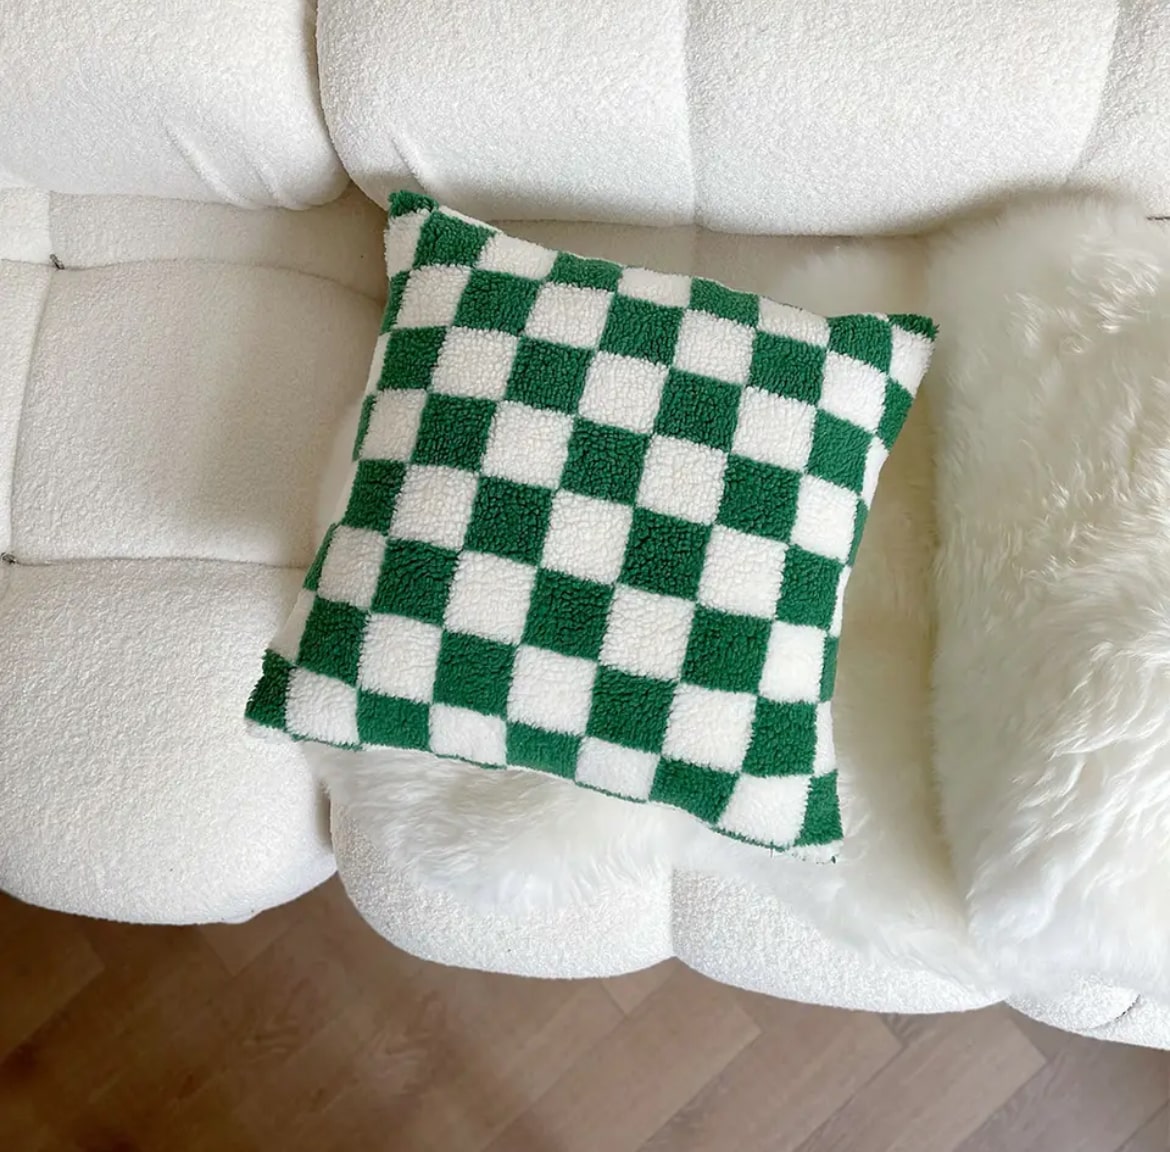 Retro plaid lamb fleece pillow cushion cover in green, enhancing the cozy ambiance of sofa decor